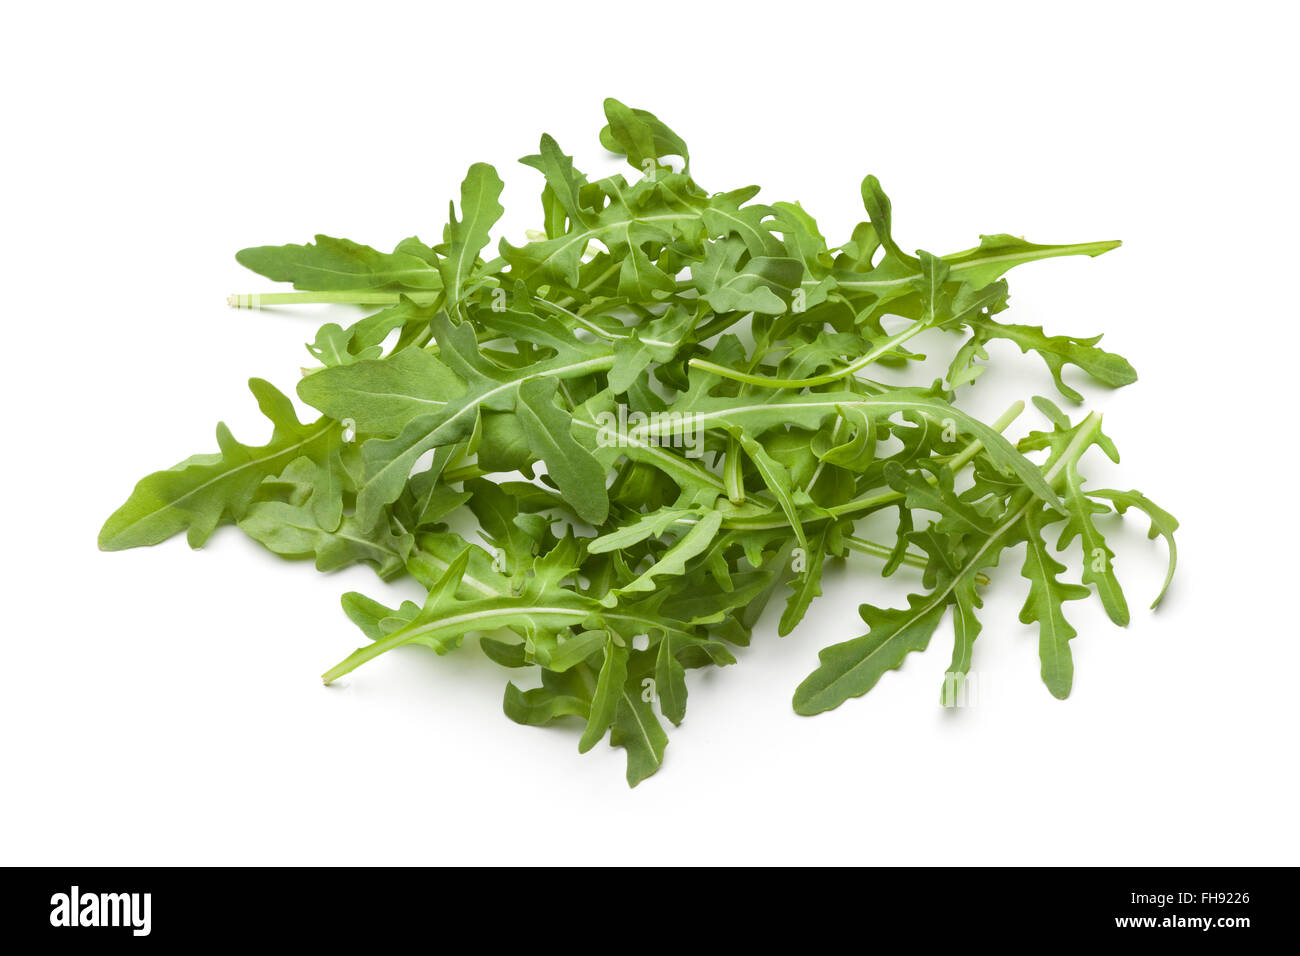 Heap of fresh raw Arugula leaves on white background Stock Photo